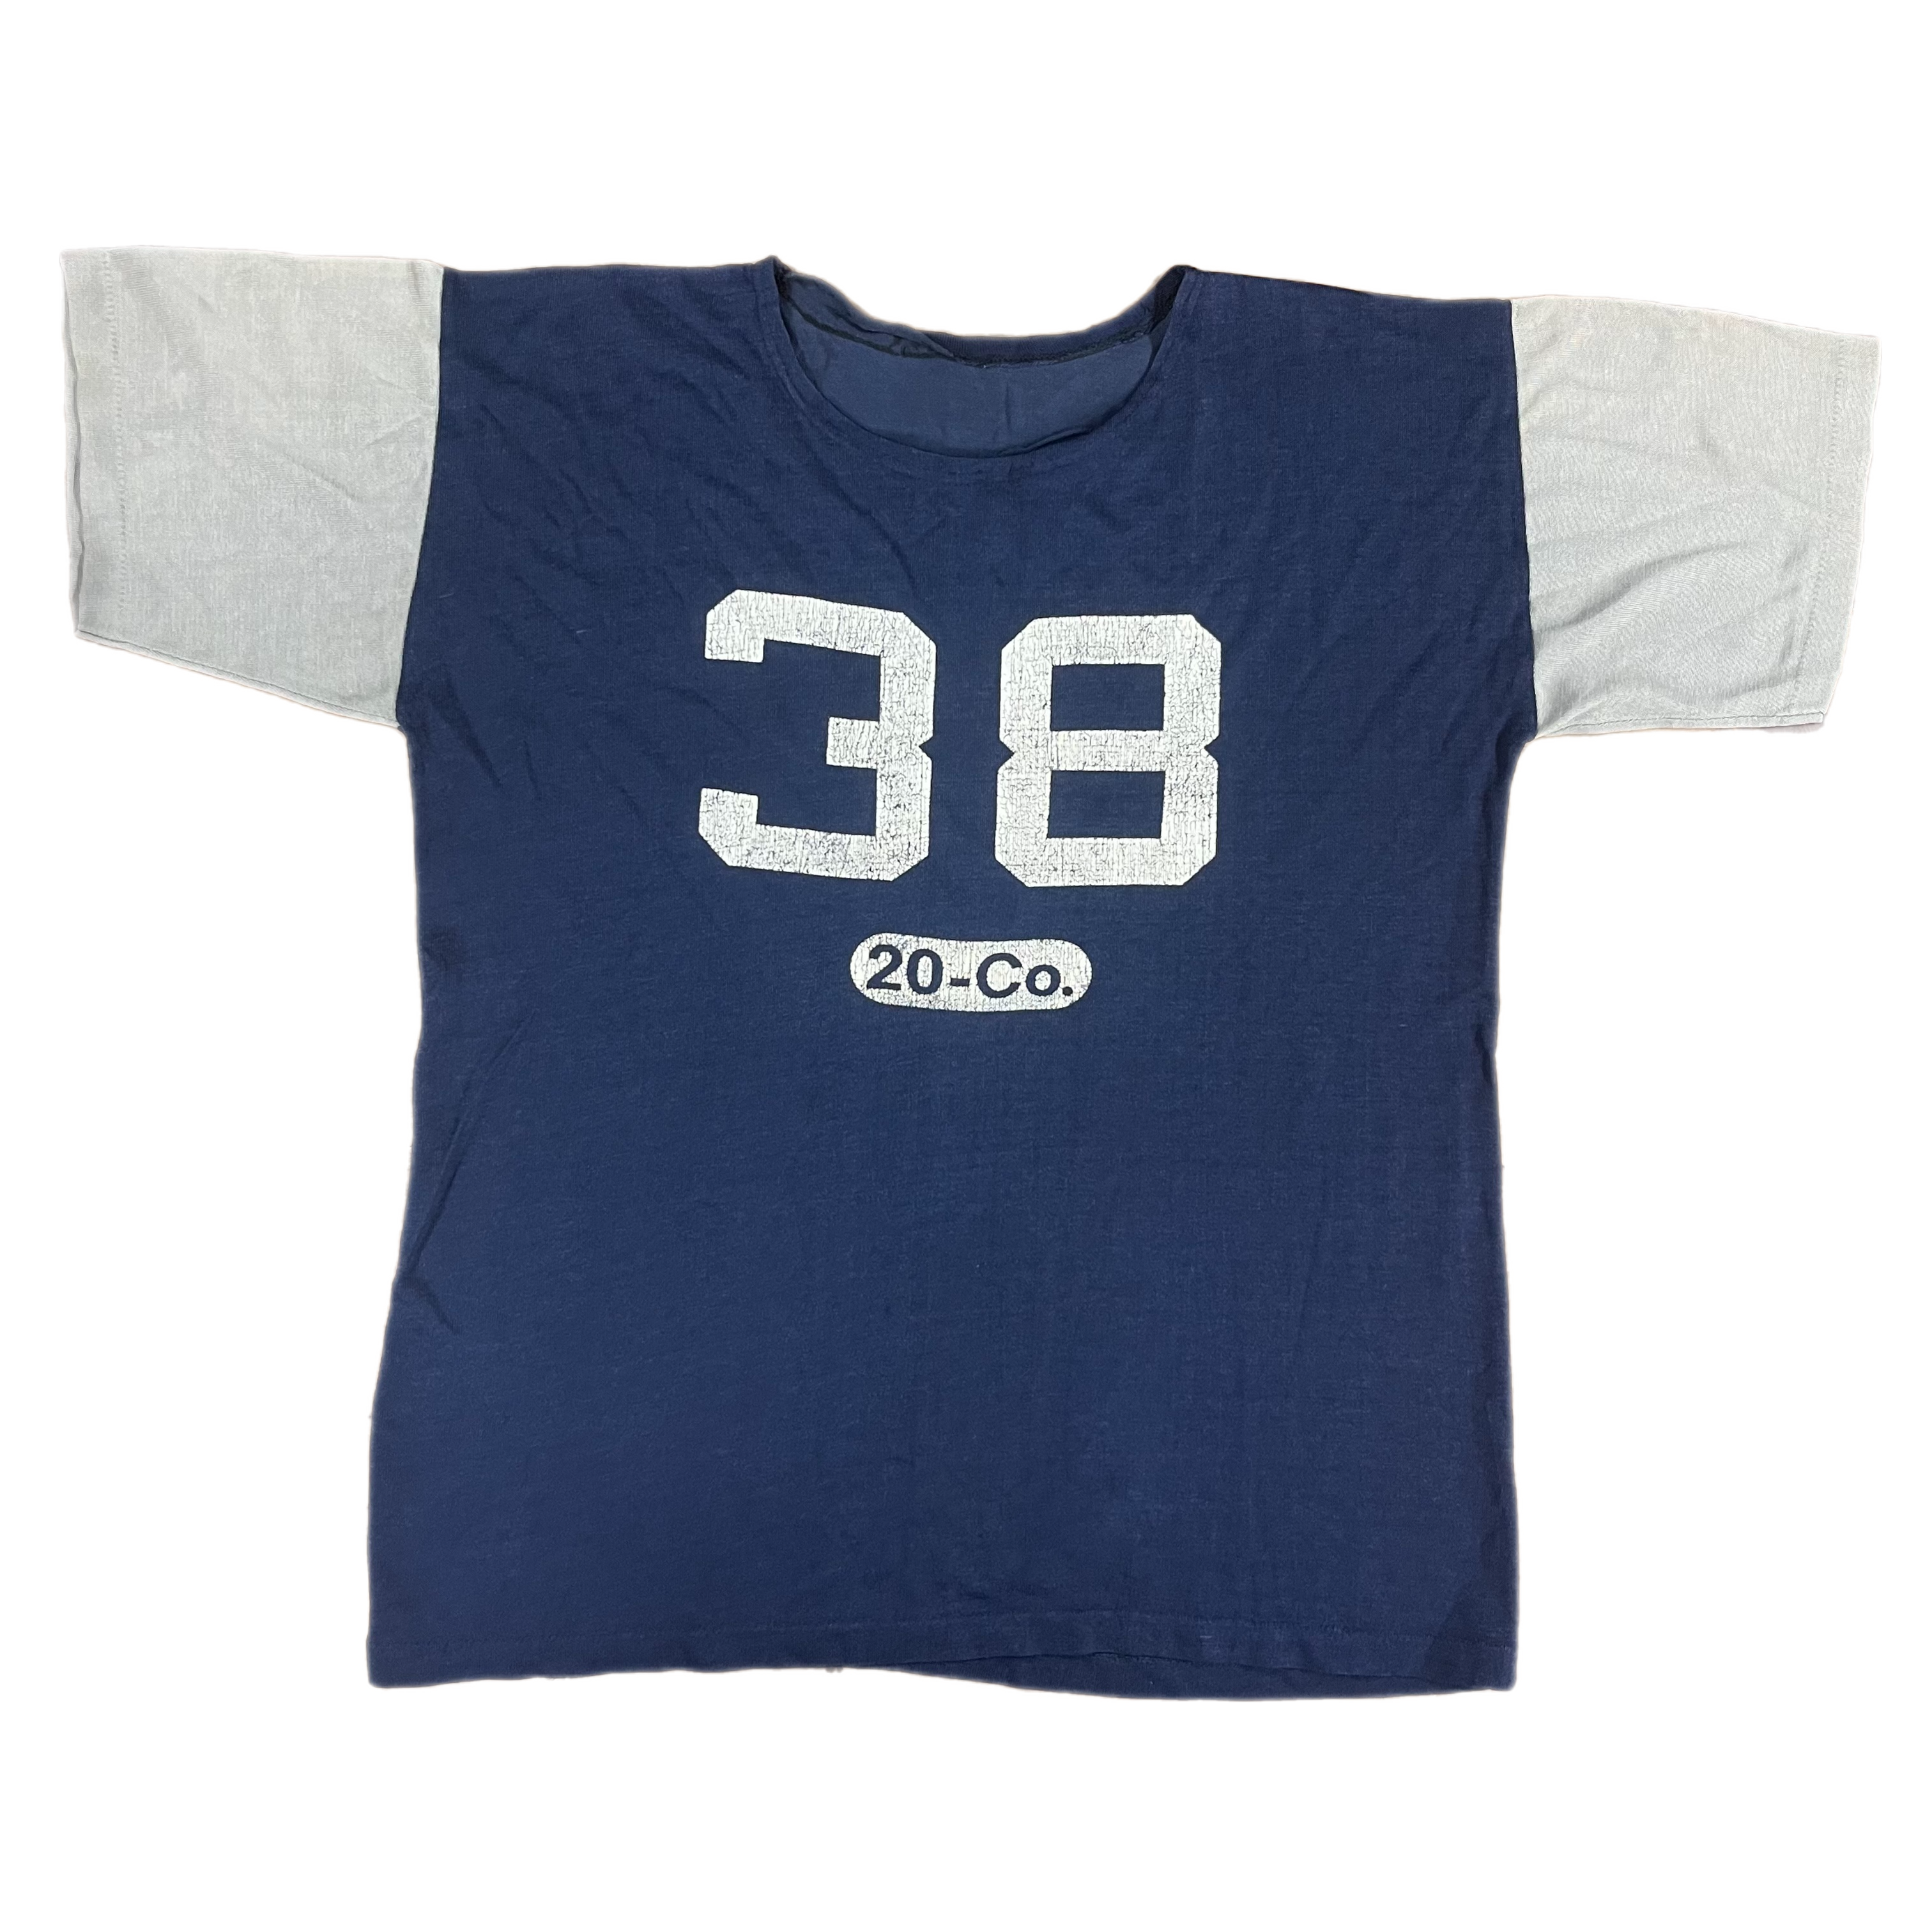 Vintage Champion Jerseys T-shirts